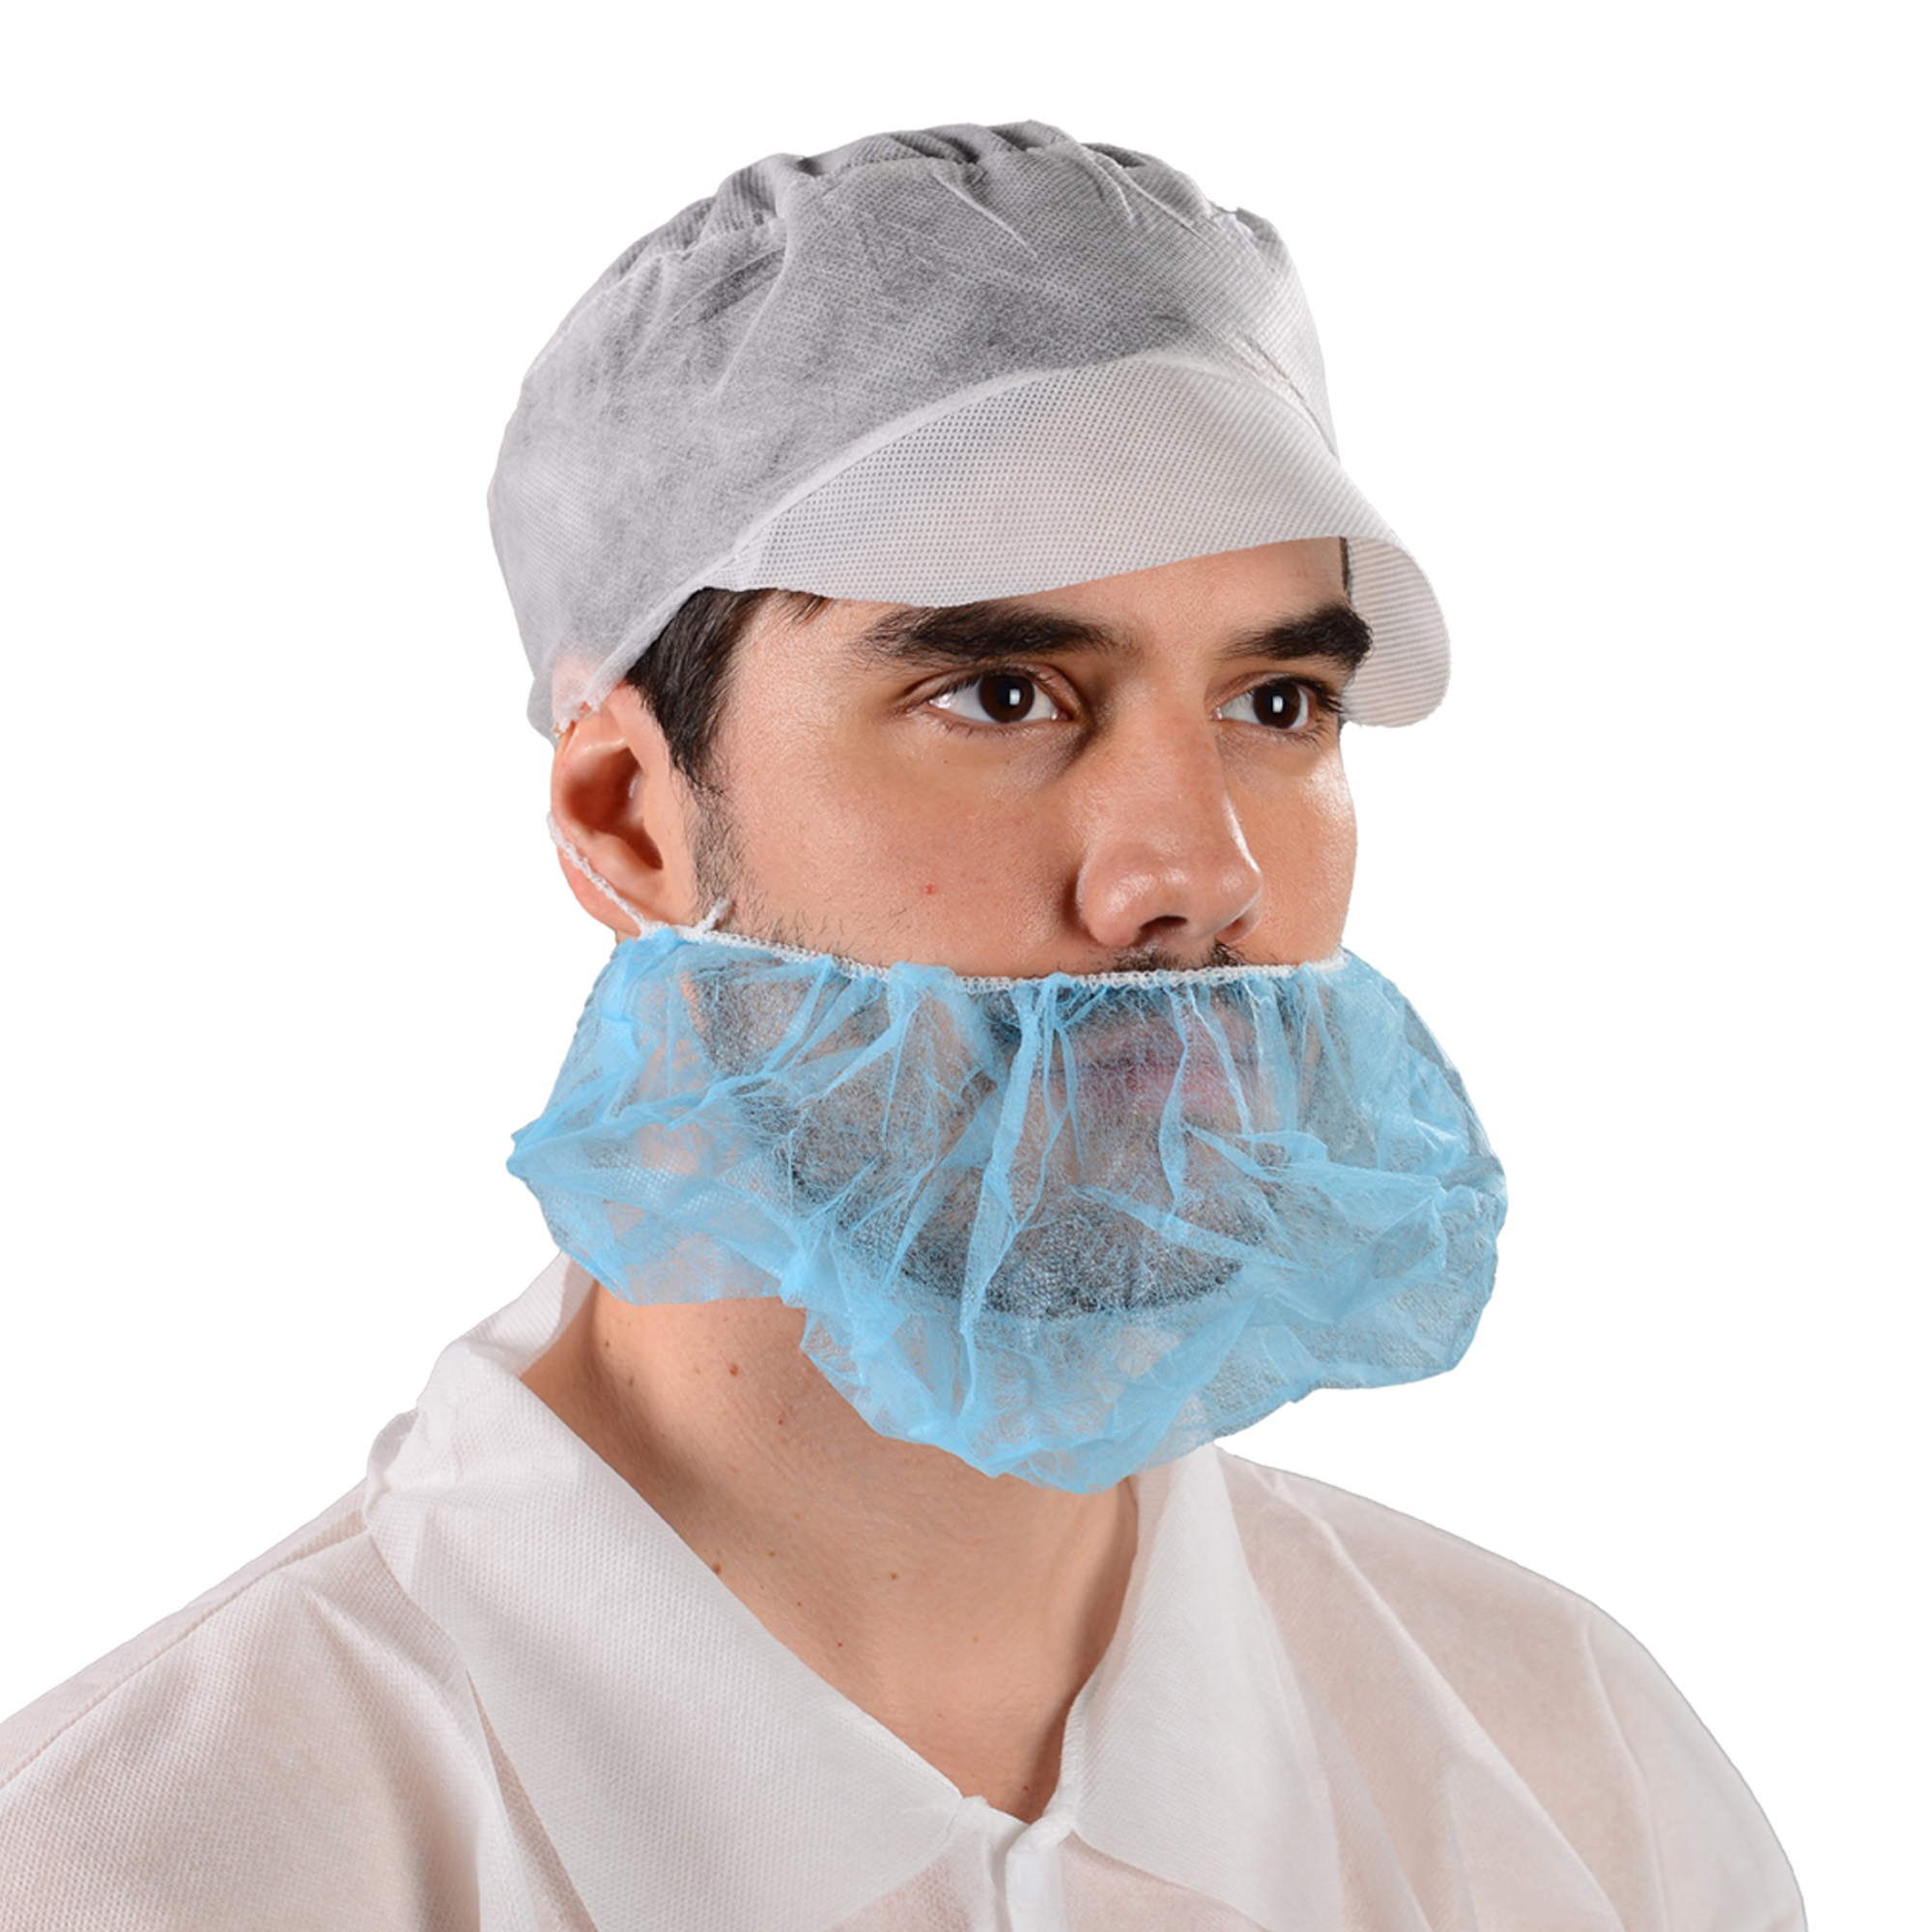 PP Nonwoven Disposable White Beard Cover